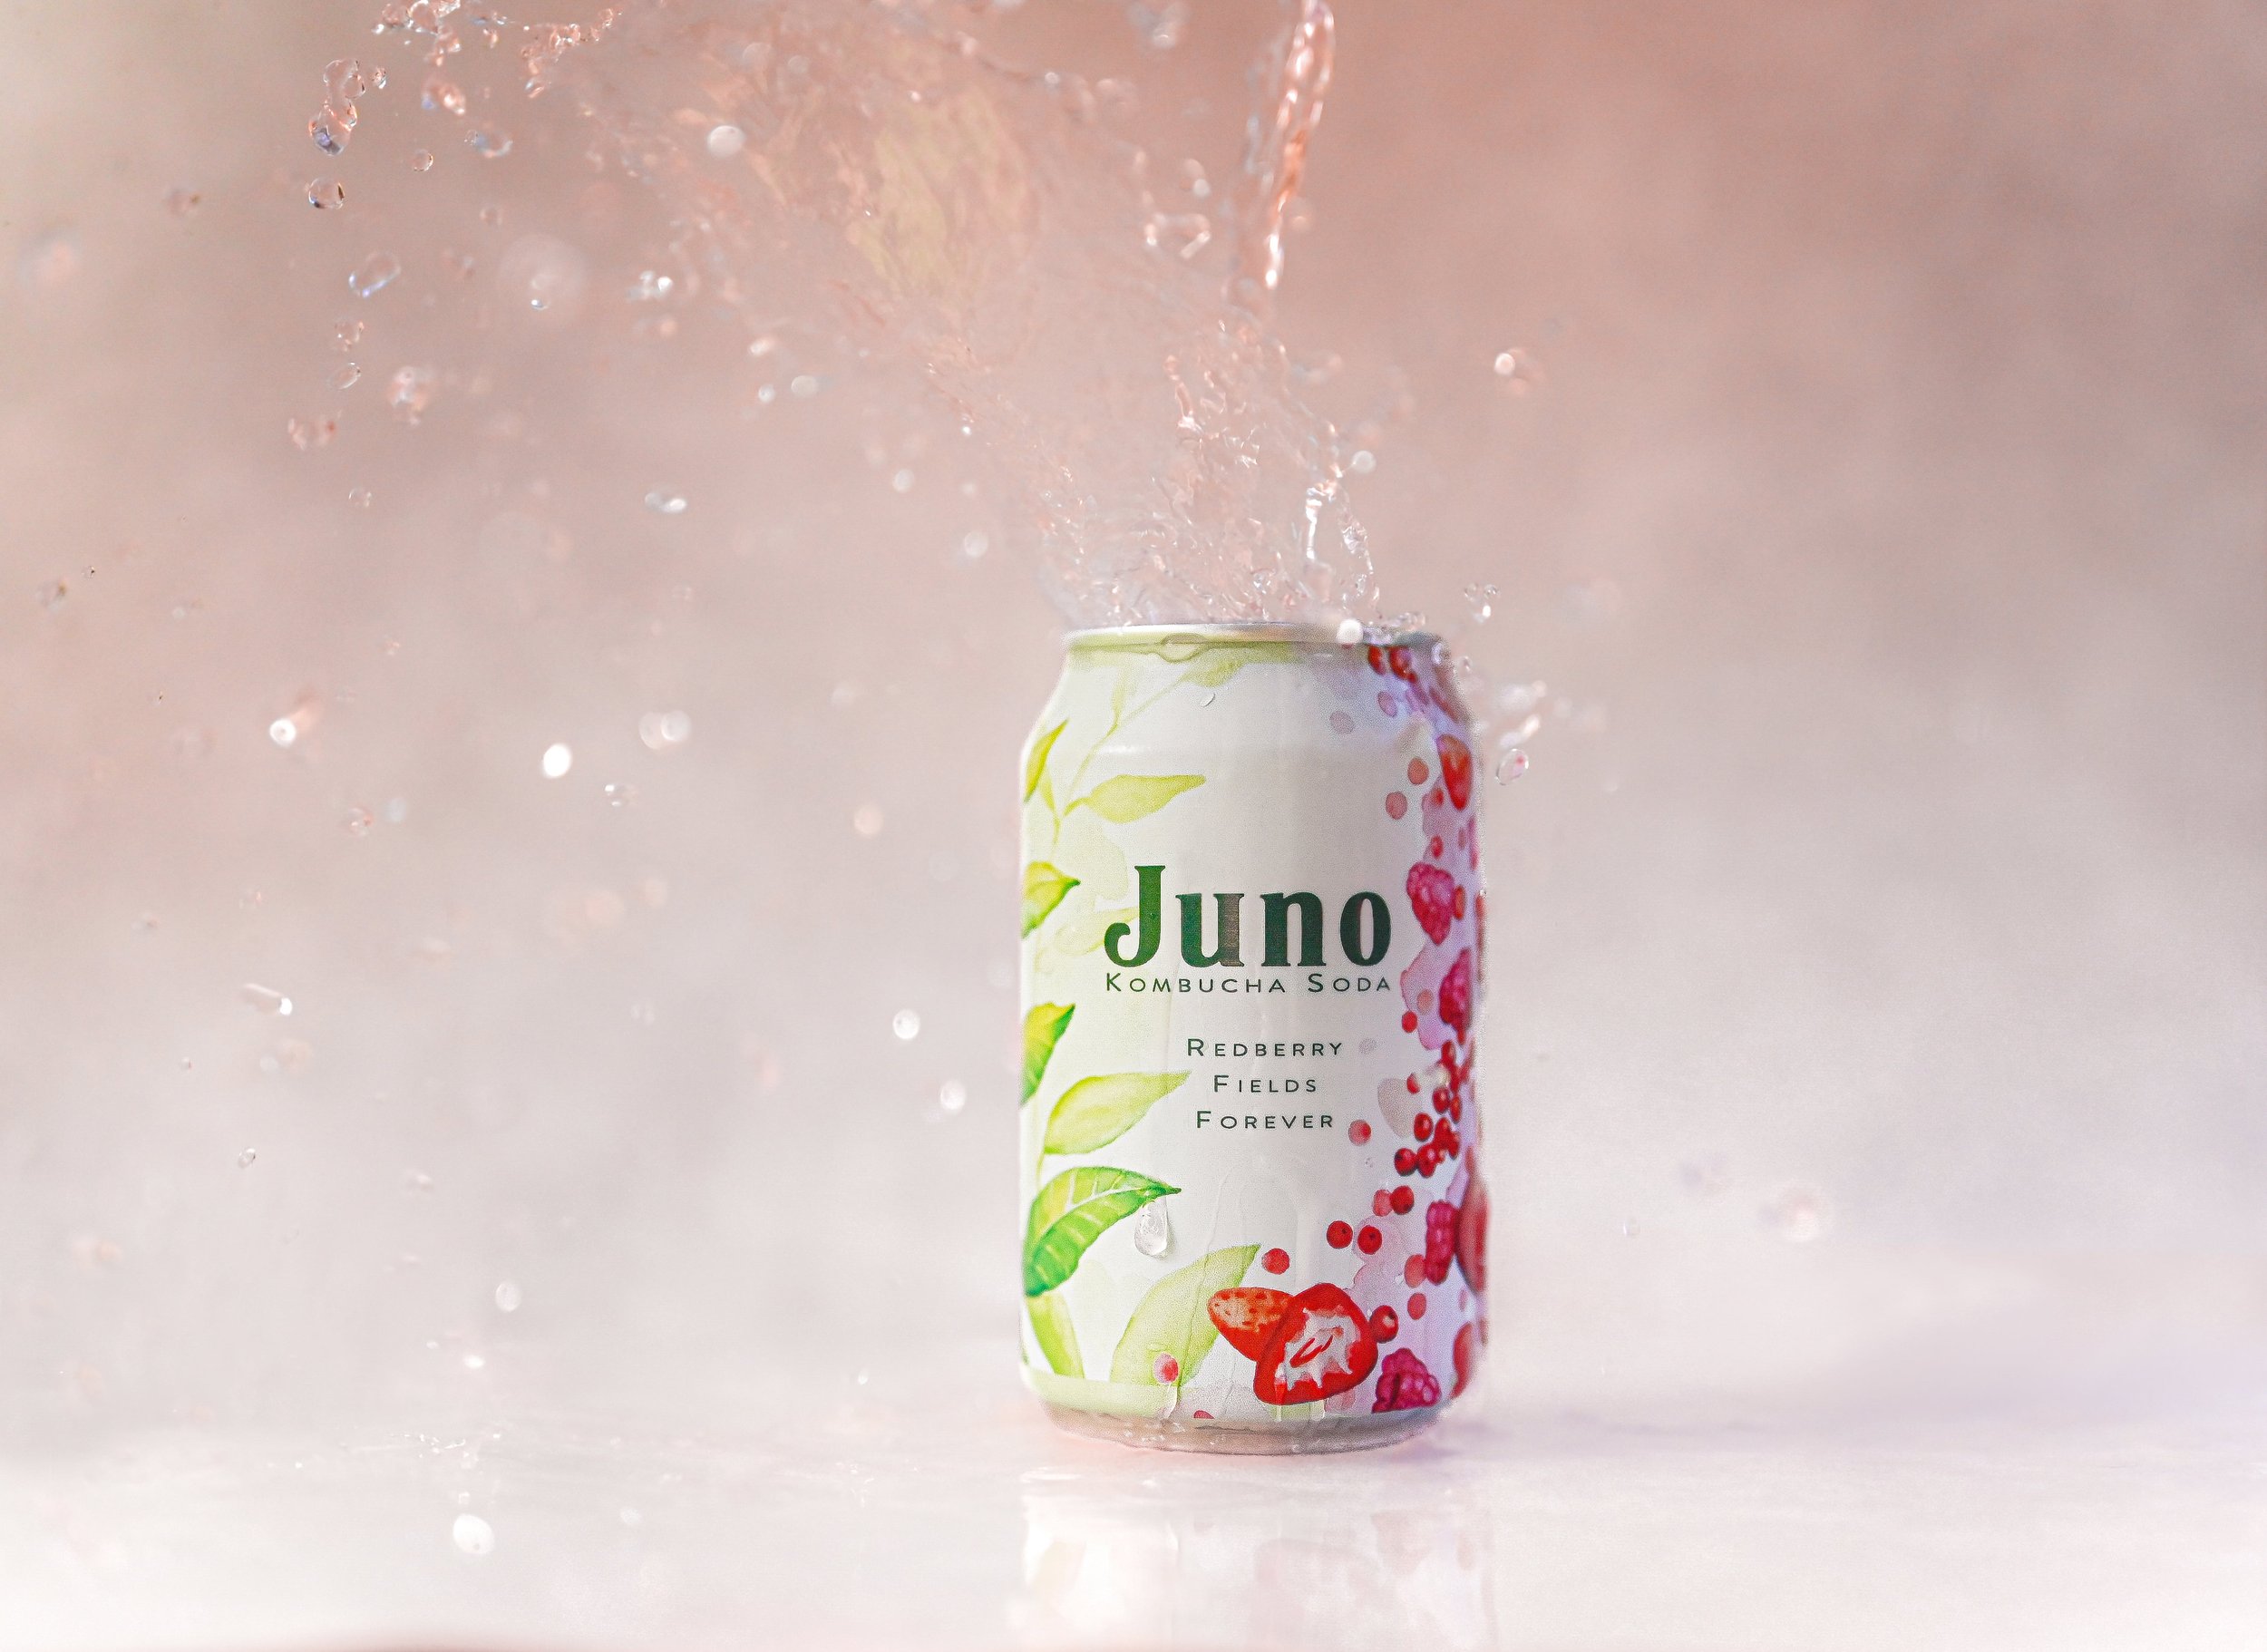 Juno Redberry Fields Forever Splash-min.jpg